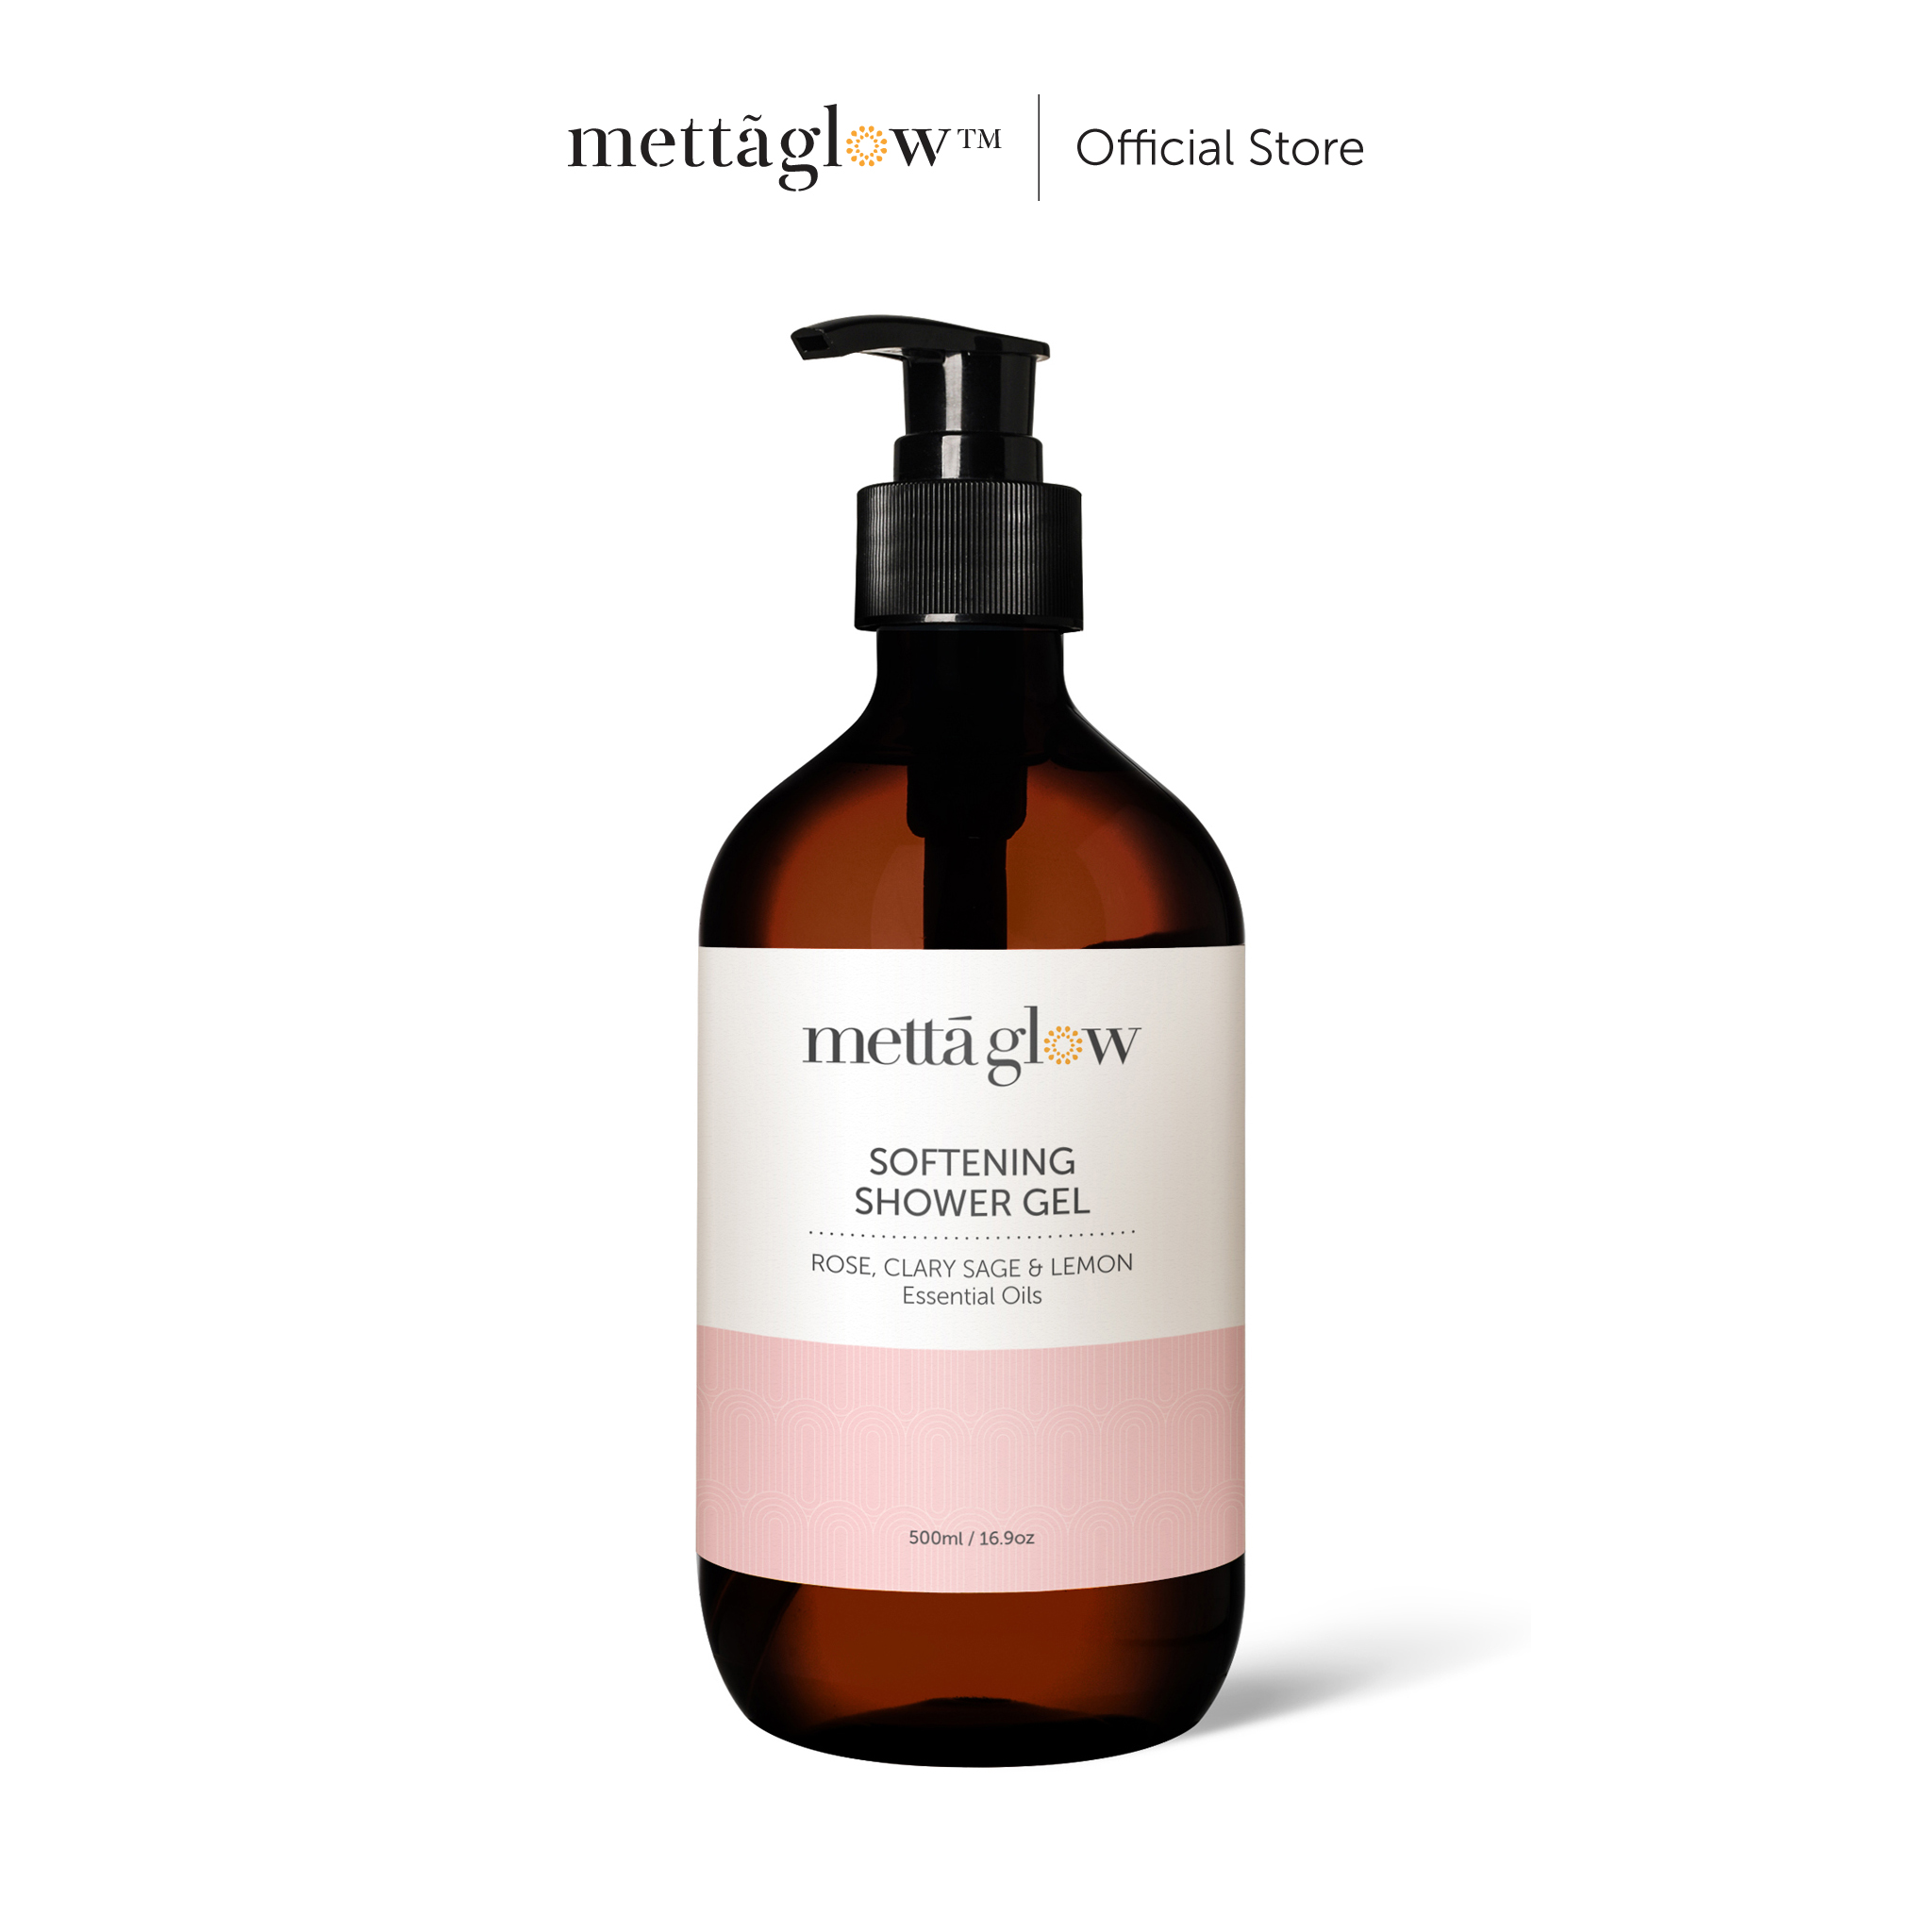 Mettaglow Softening Shower Gel with Rose, Clary Sage & Lemon Essential Oils (500ml)